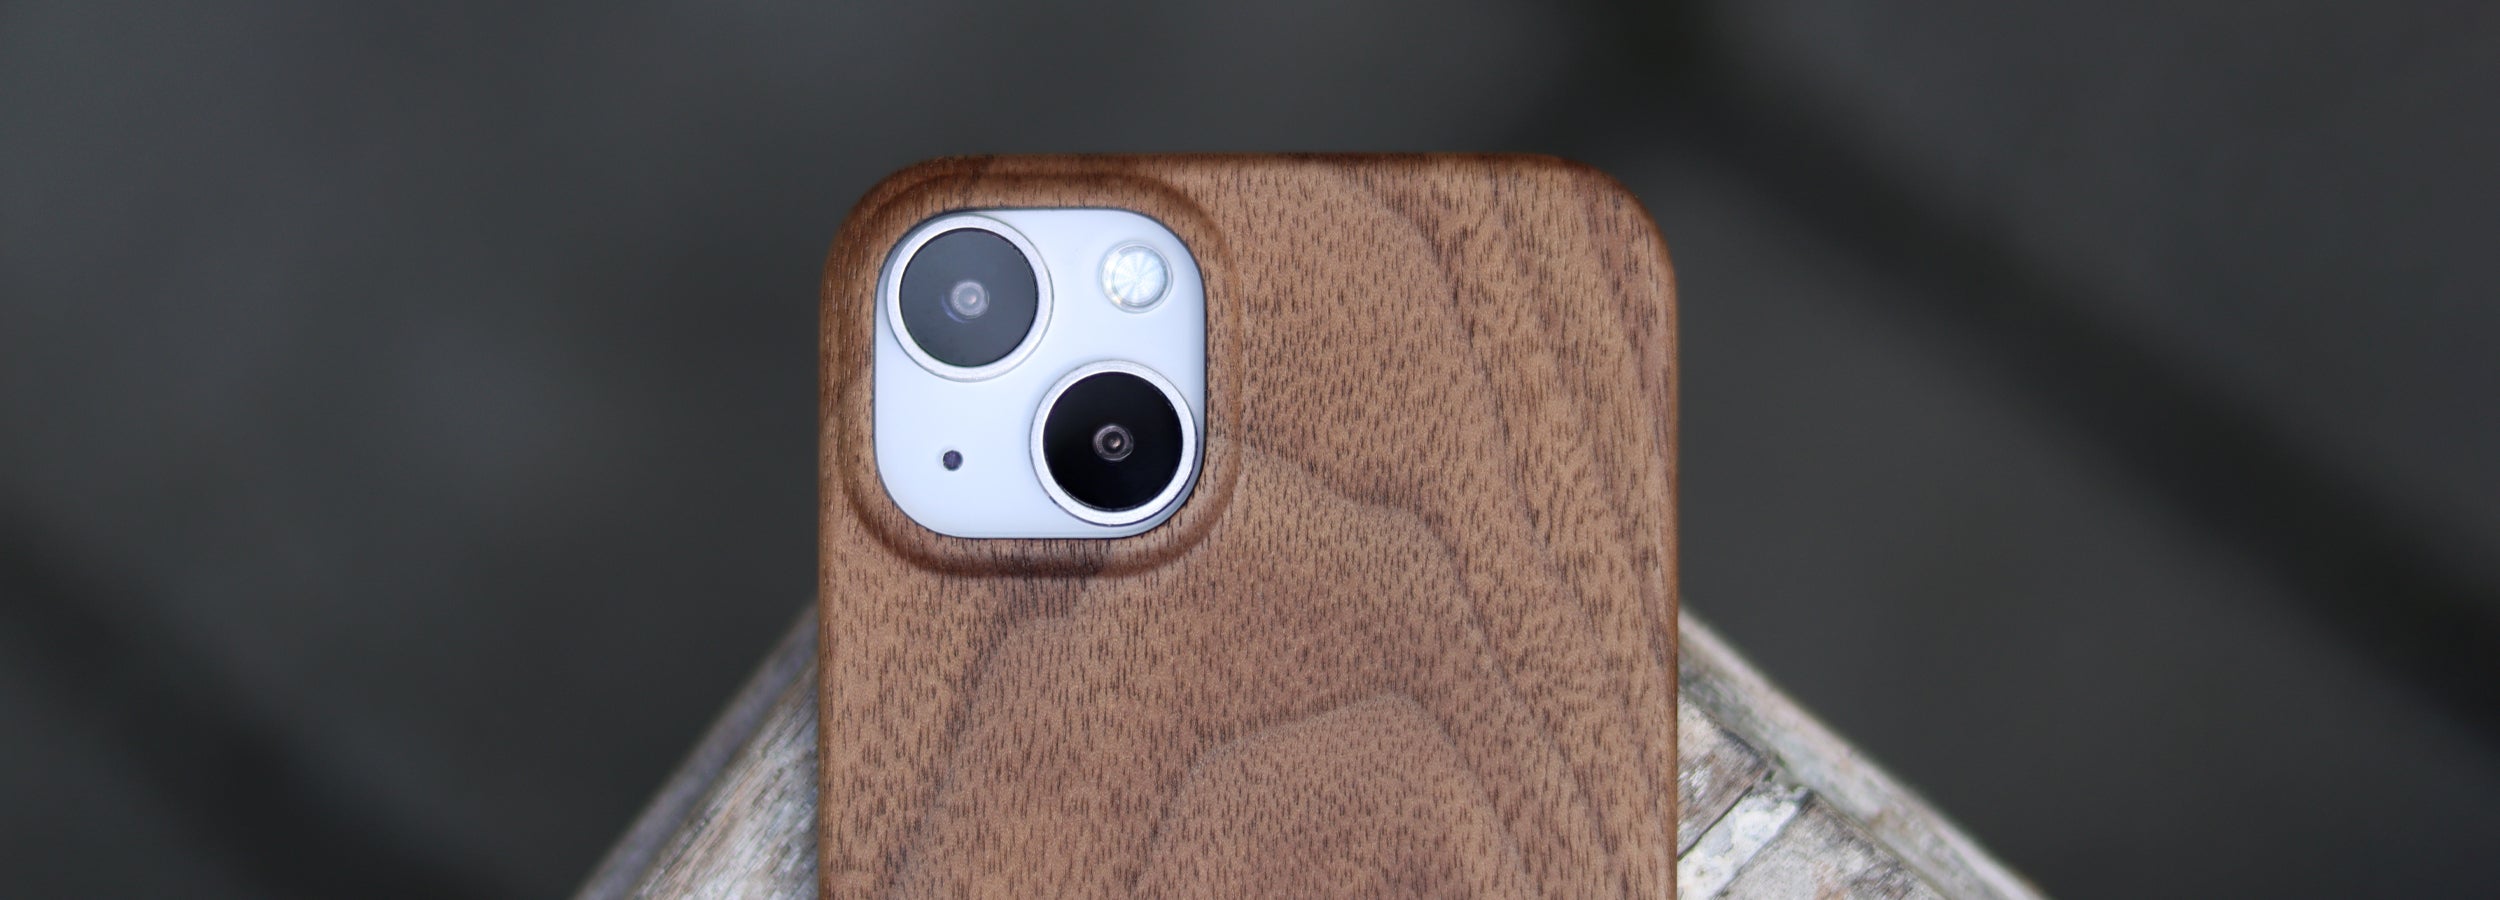 Komodo Walnut Wood iPhone Case Close Up